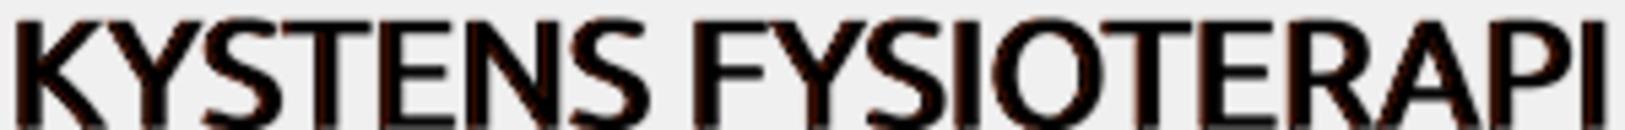 Kystens Fysioterapi logo